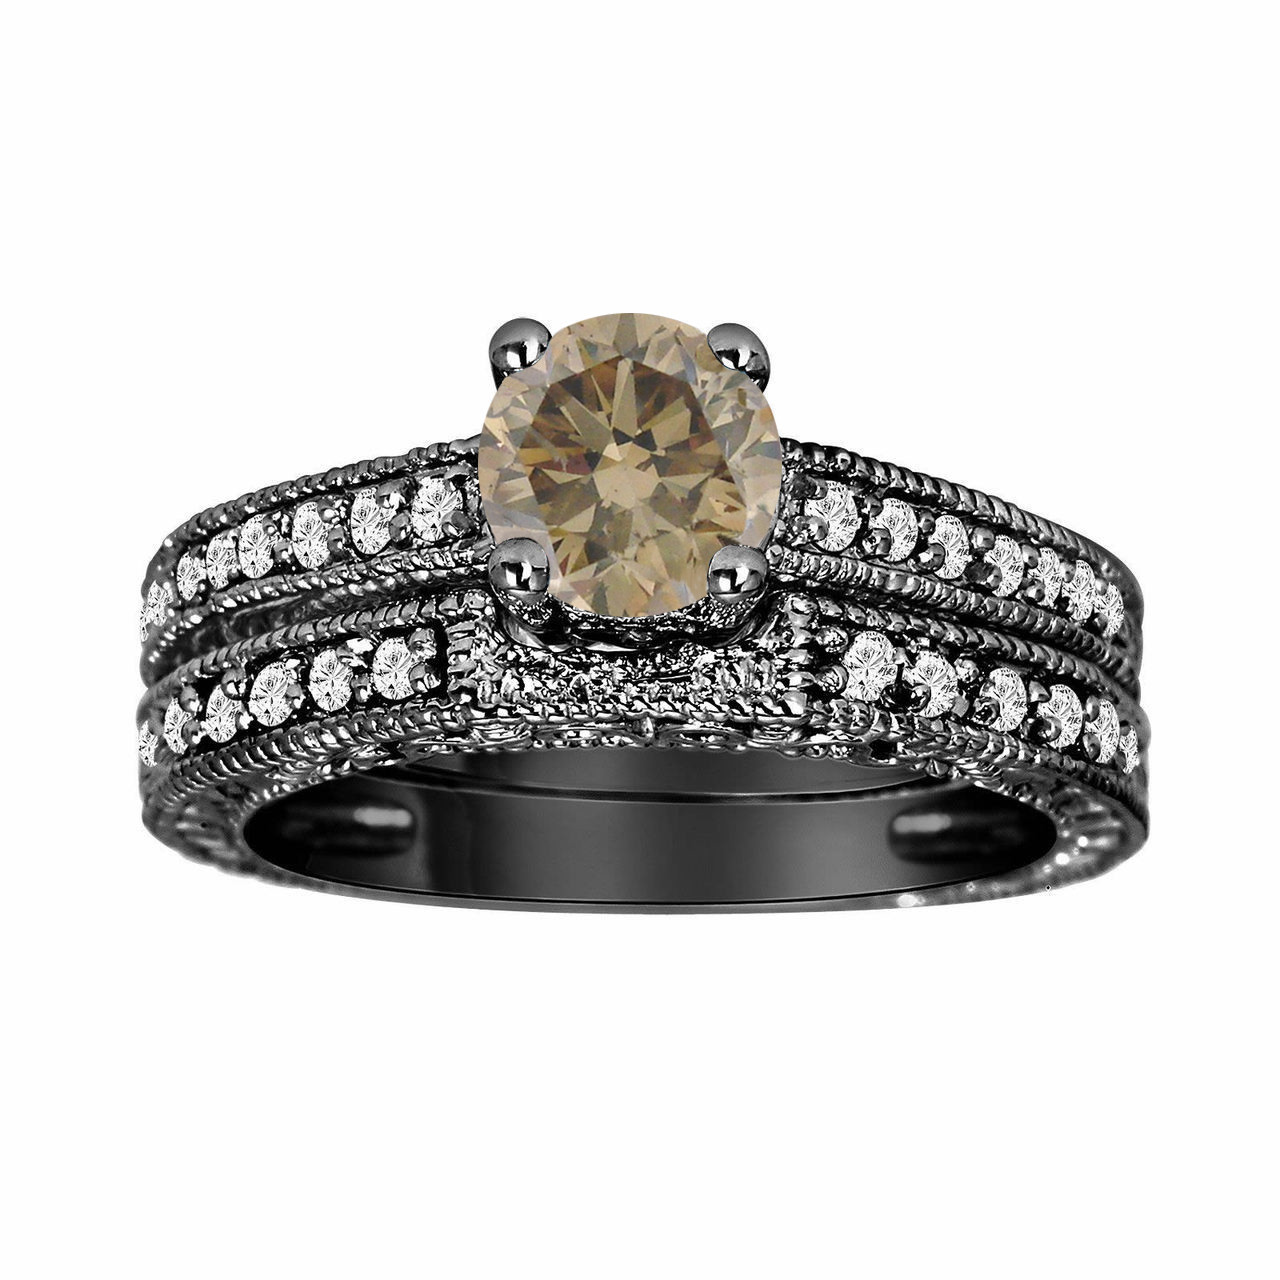 Fancy Color Diamonds I Engagement Rings I Jewelry I Langerman Diamonds